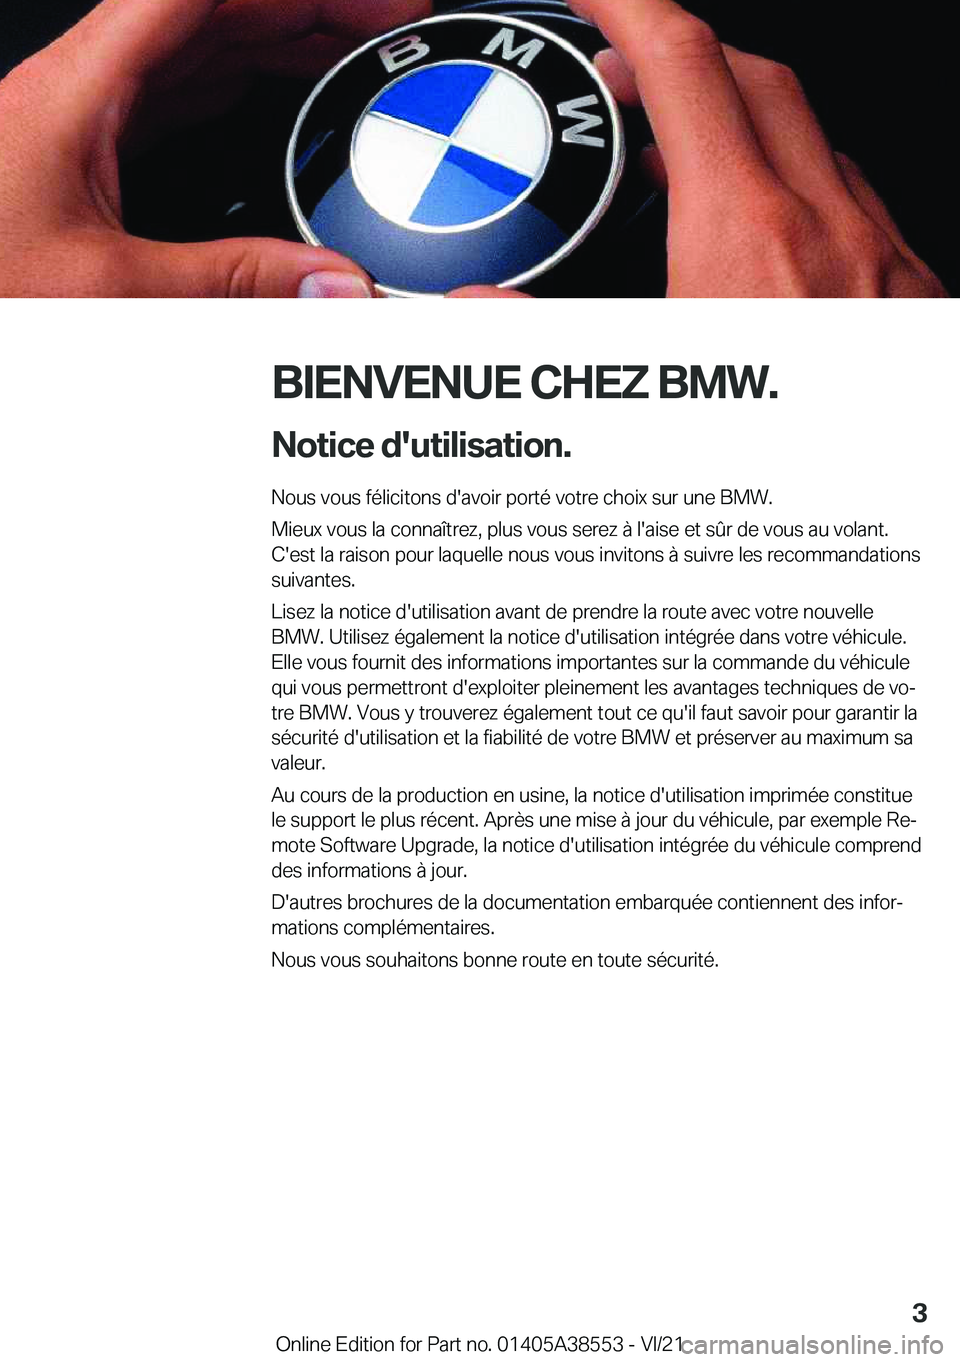 BMW X6 2022  Notices Demploi (in French) �B�I�E�N�V�E�N�U�E��C�H�E�Z��B�M�W�.�N�o�t�i�c�e��d�'�u�t�i�l�i�s�a�t�i�o�n�.
�N�o�u�s��v�o�u�s��f�é�l�i�c�i�t�o�n�s��d�'�a�v�o�i�r��p�o�r�t�é��v�o�t�r�e��c�h�o�i�x��s�u�r��u�n�e�